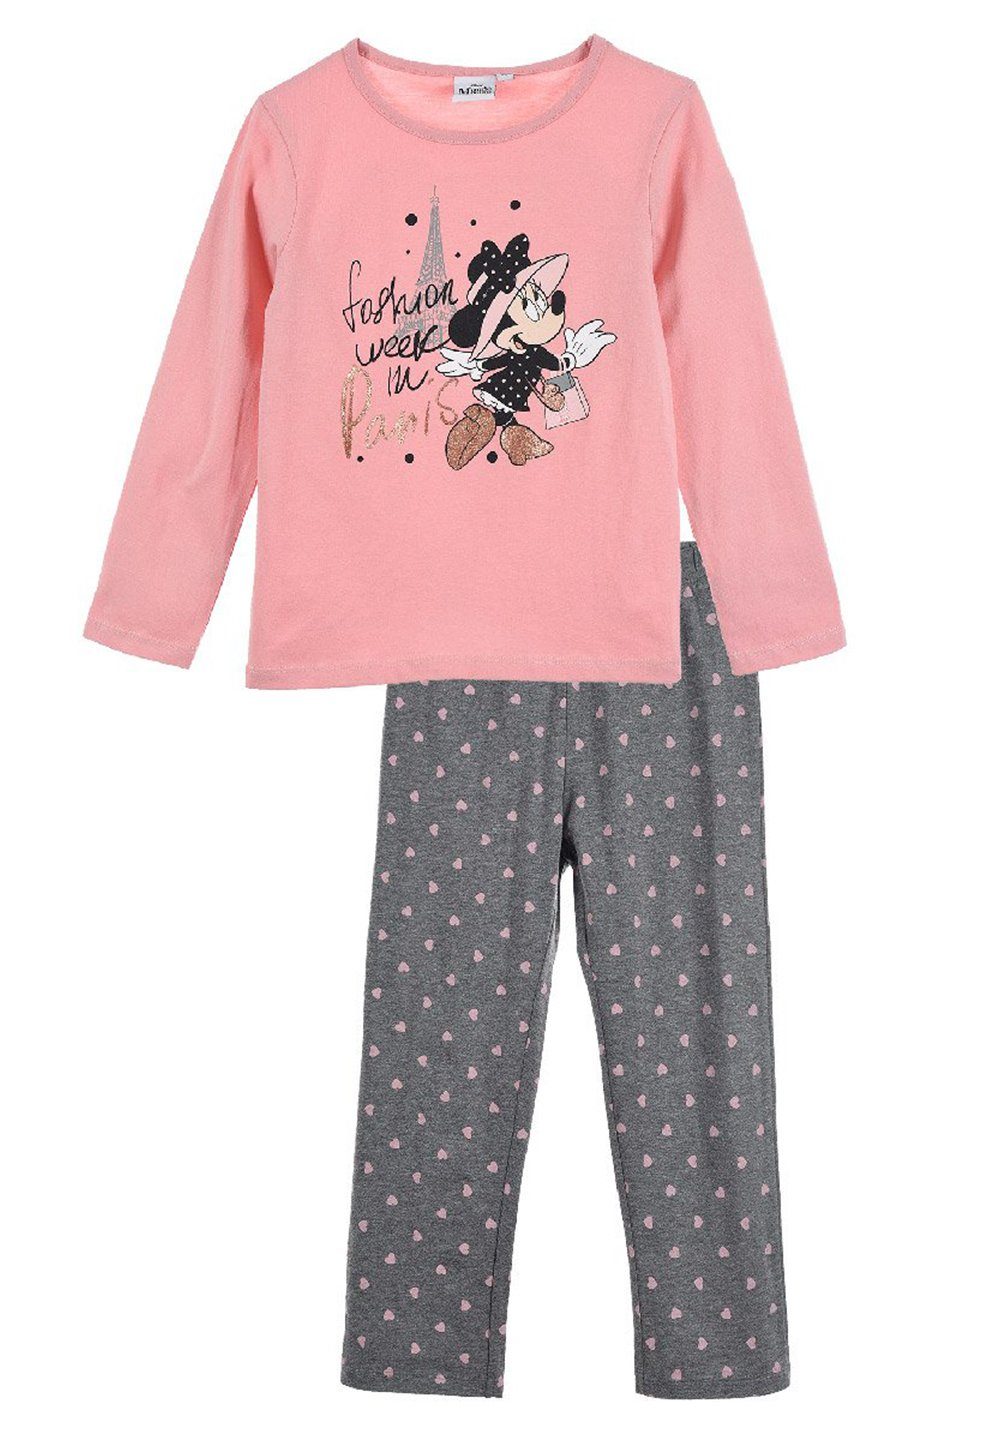 Pyjama Minnie Shirt Kinder Disney Langarm Maus Mini Mouse Pink Mädchen Schlafanzug Schlafanzug Kinder Schlaf-Hose +